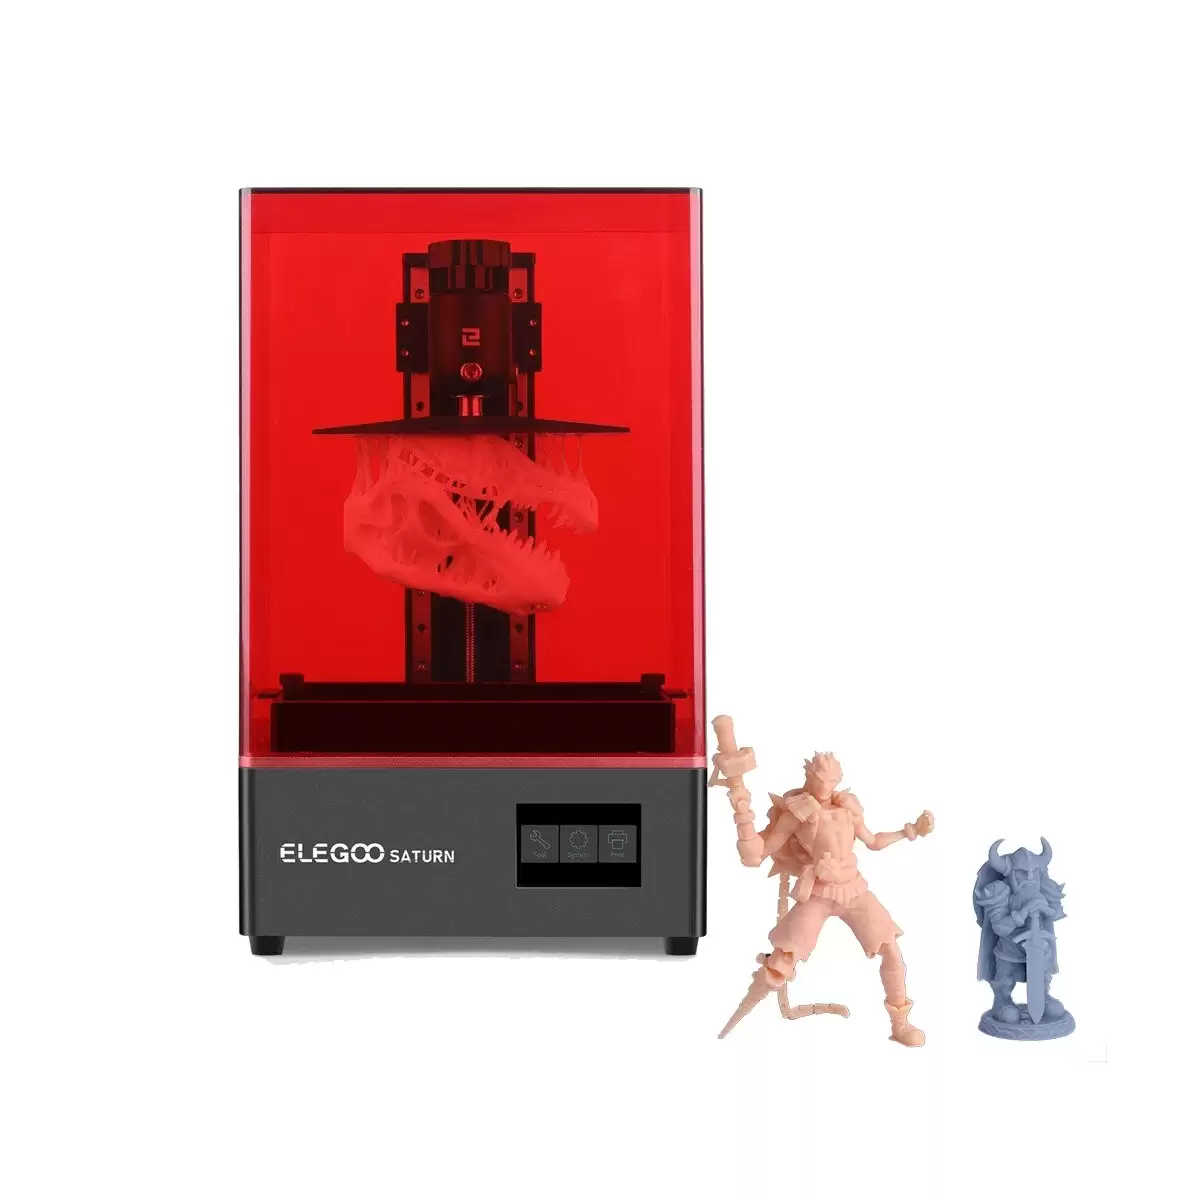 Order In Just $479.99 Elegoo Saturn Resin 3d Printer With This Coupon At Banggood